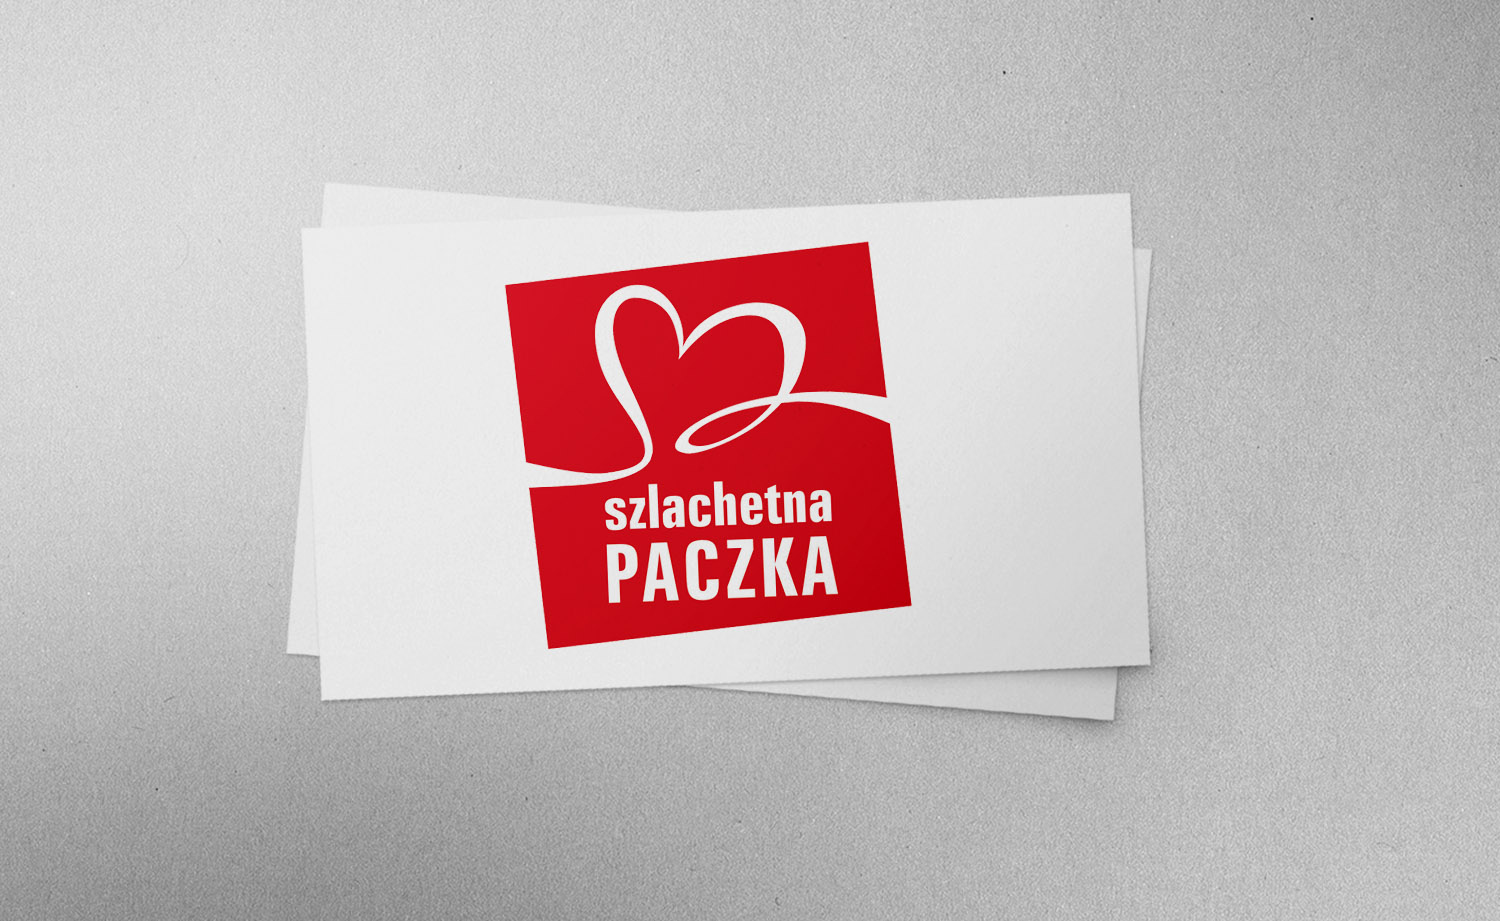 The Noble Box (Szlachetna Paczka) with Biuro Podróży Reklamy